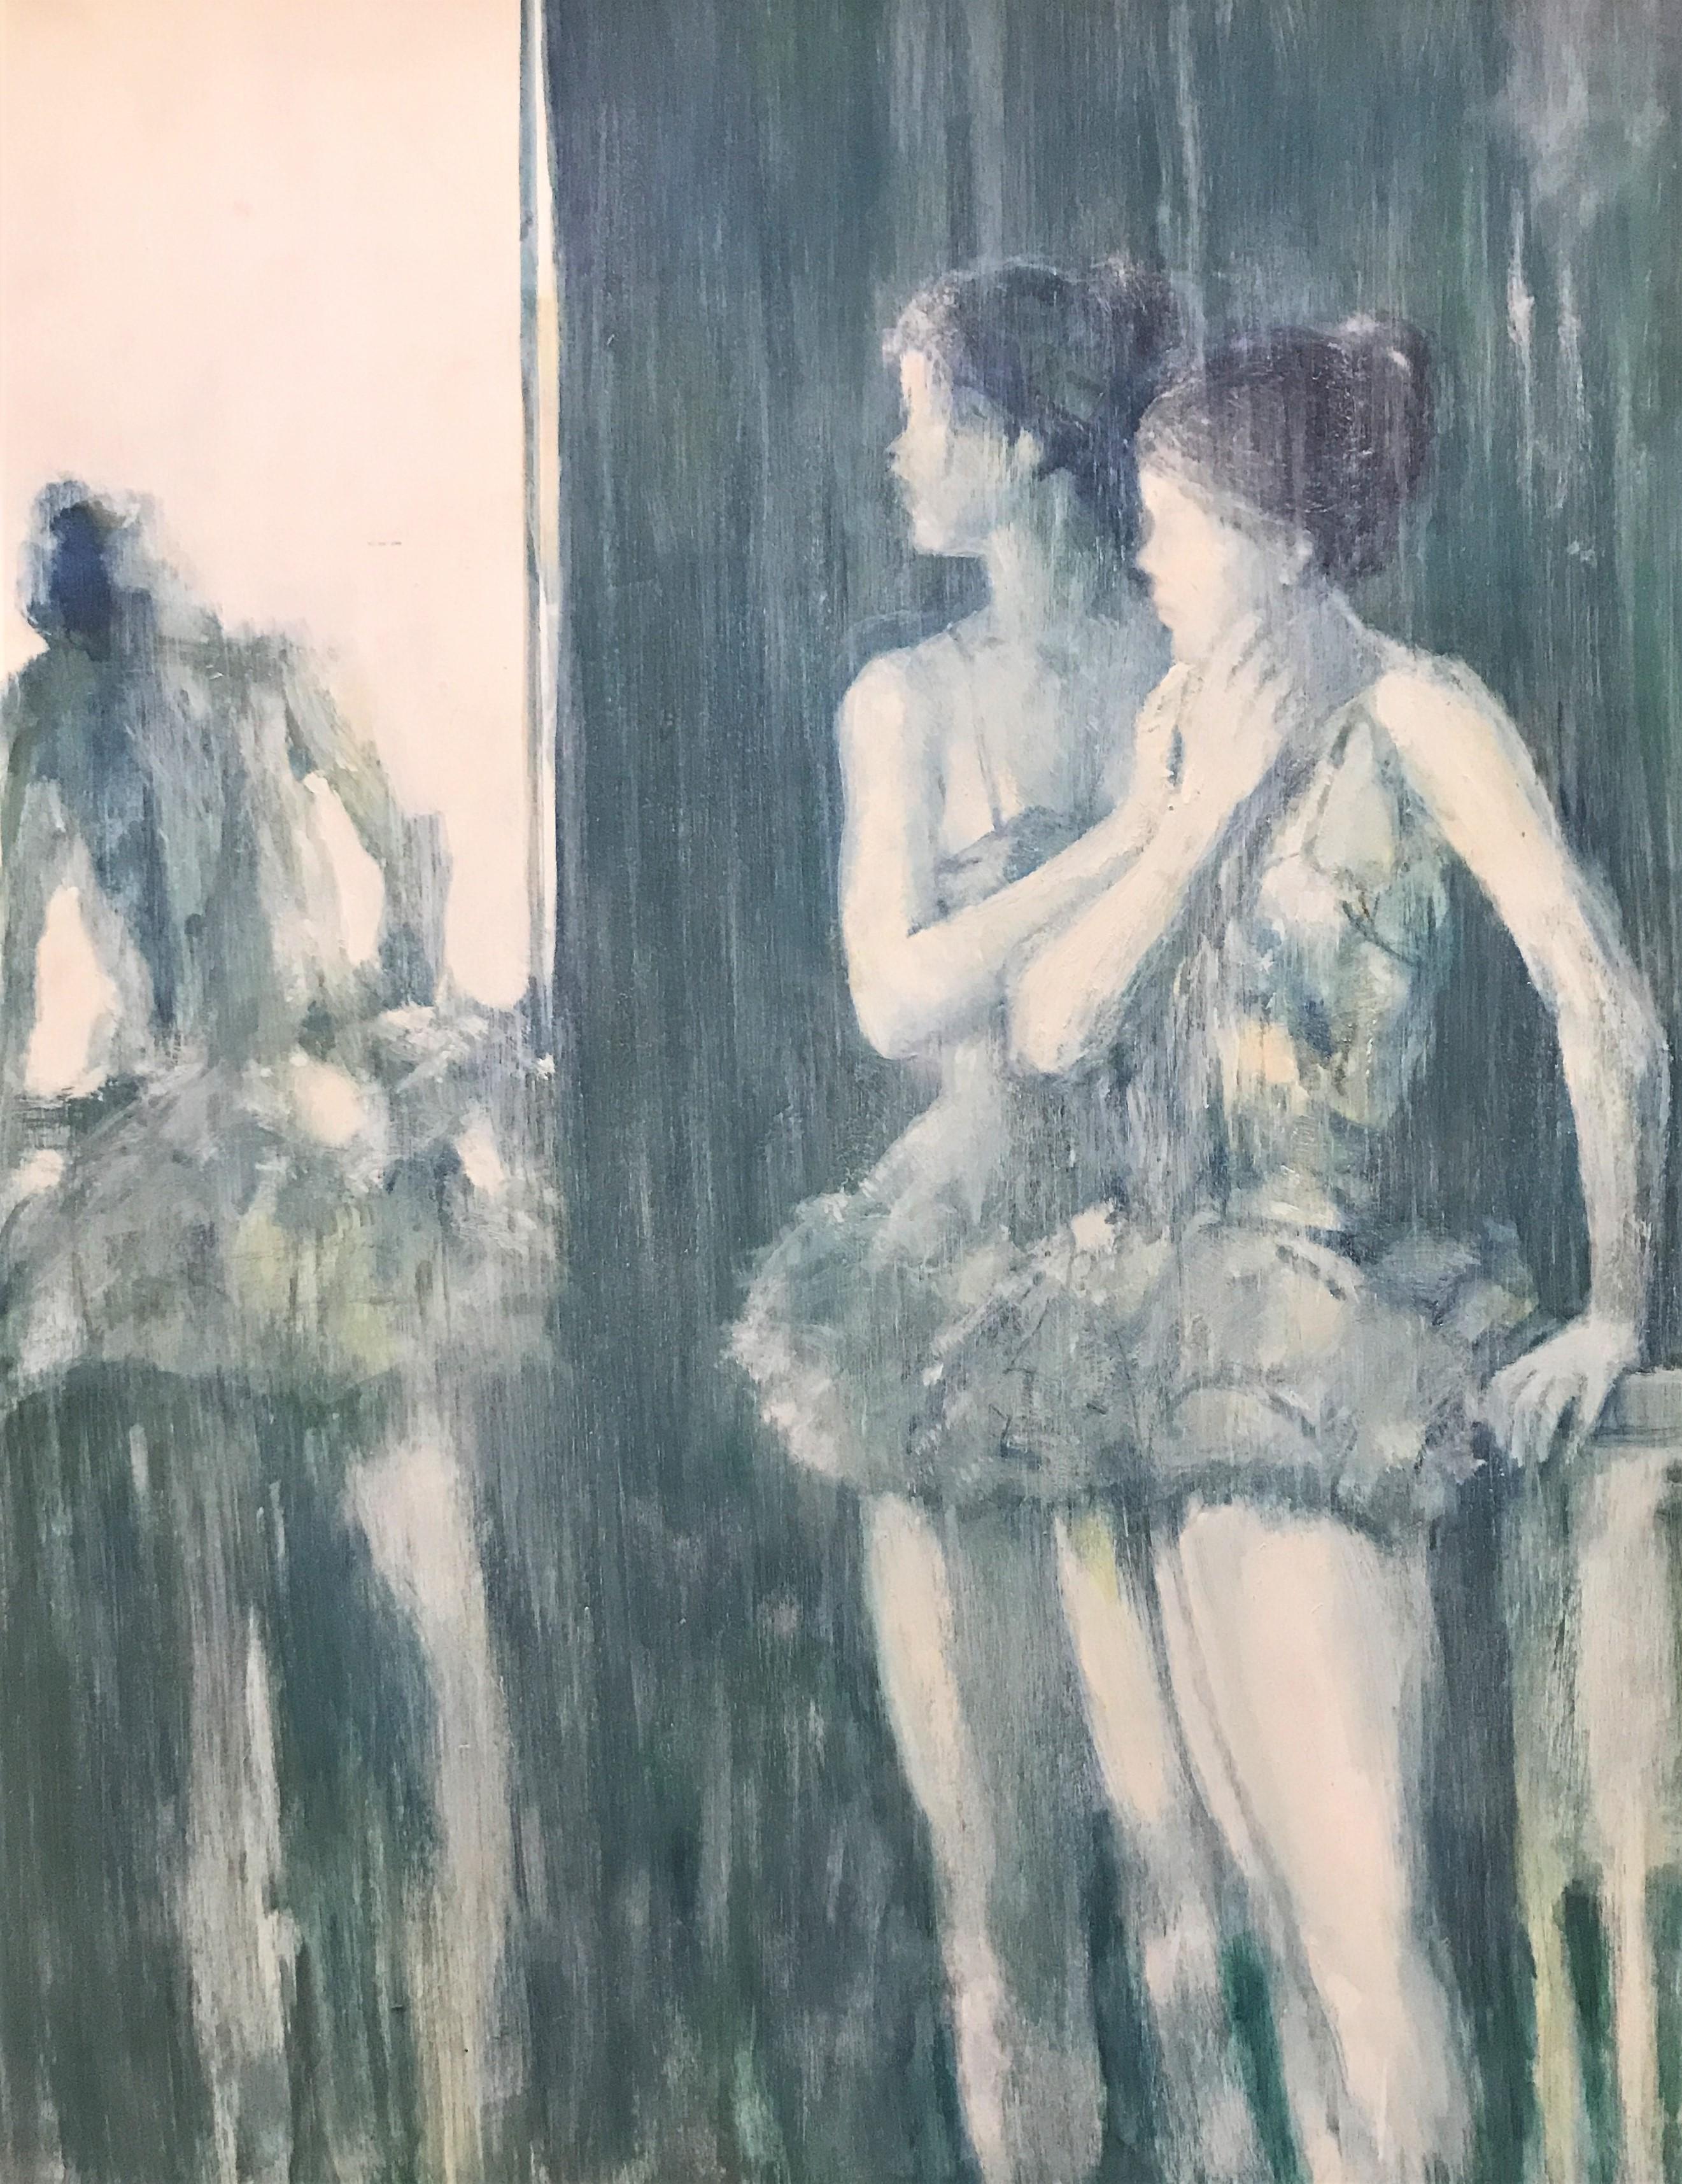 Walter Rovira Figurative Painting - The Dancers/Monochrome, original oil on canvas, 